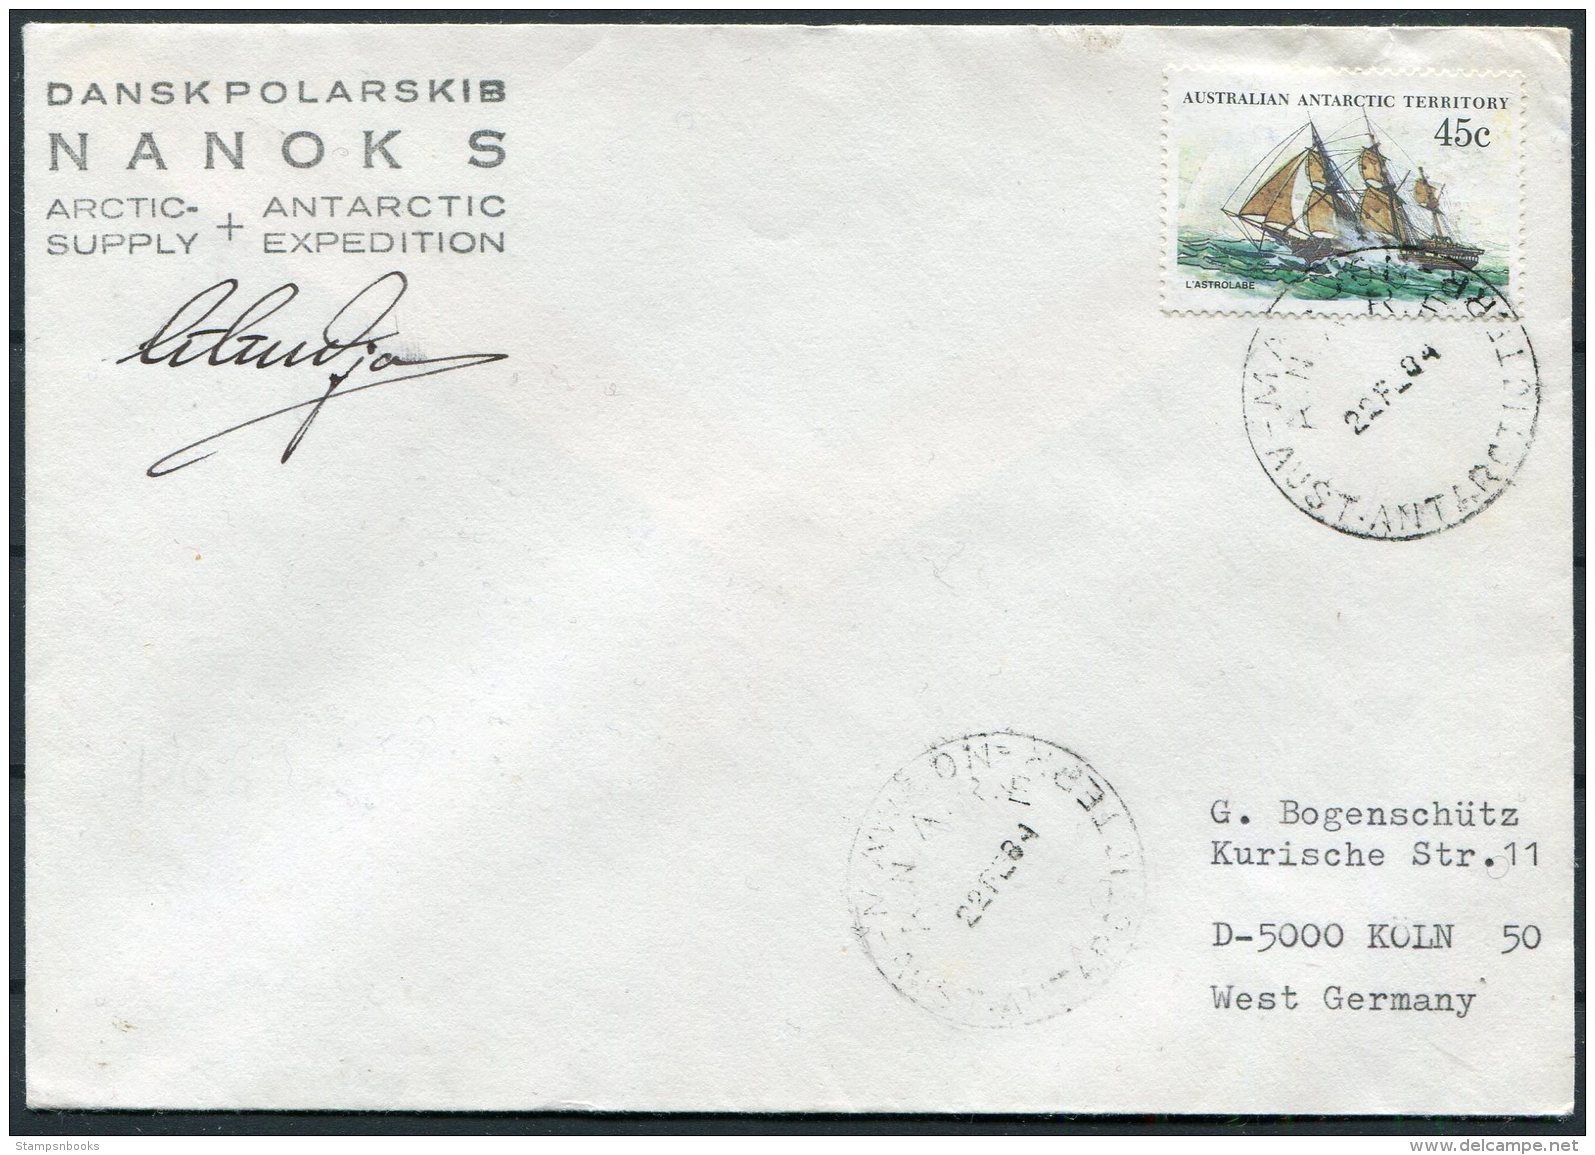 1984 AAT Casey Antarctica Polar Cover. Expedition Dansk Polarskib, Denmark Danish Ship NANOK S - Covers & Documents